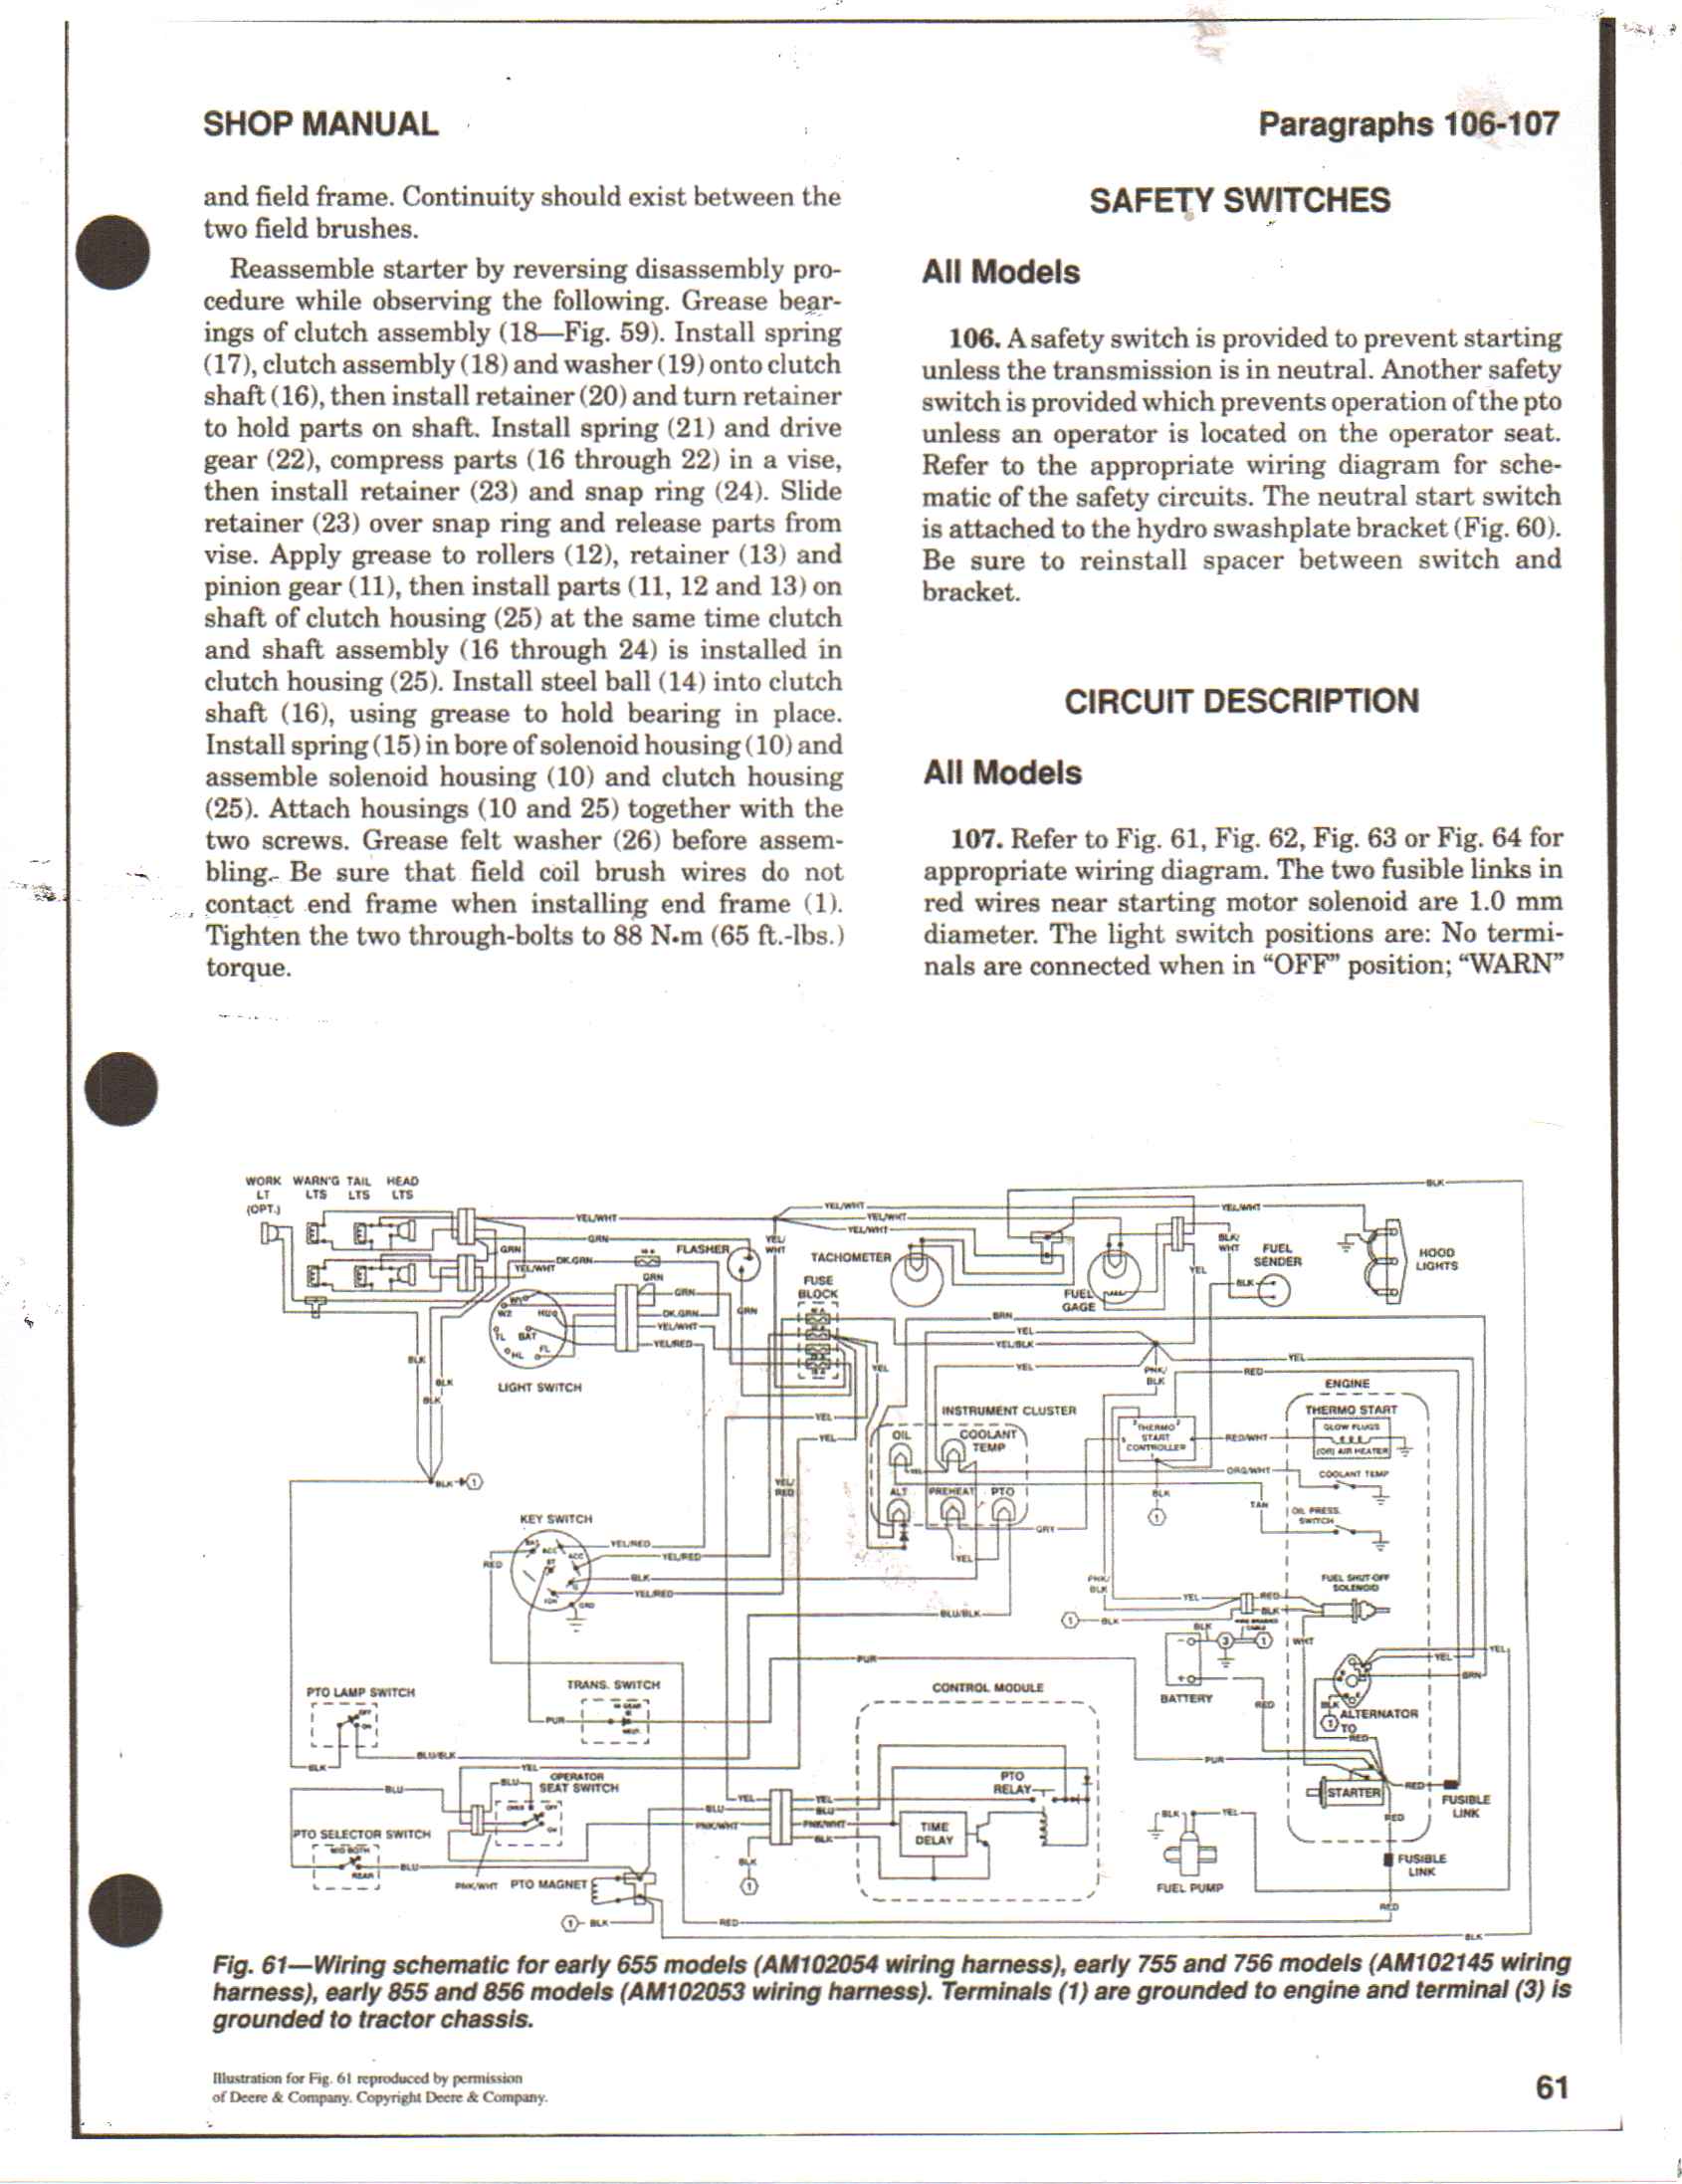 john deere 790 wiring diagram